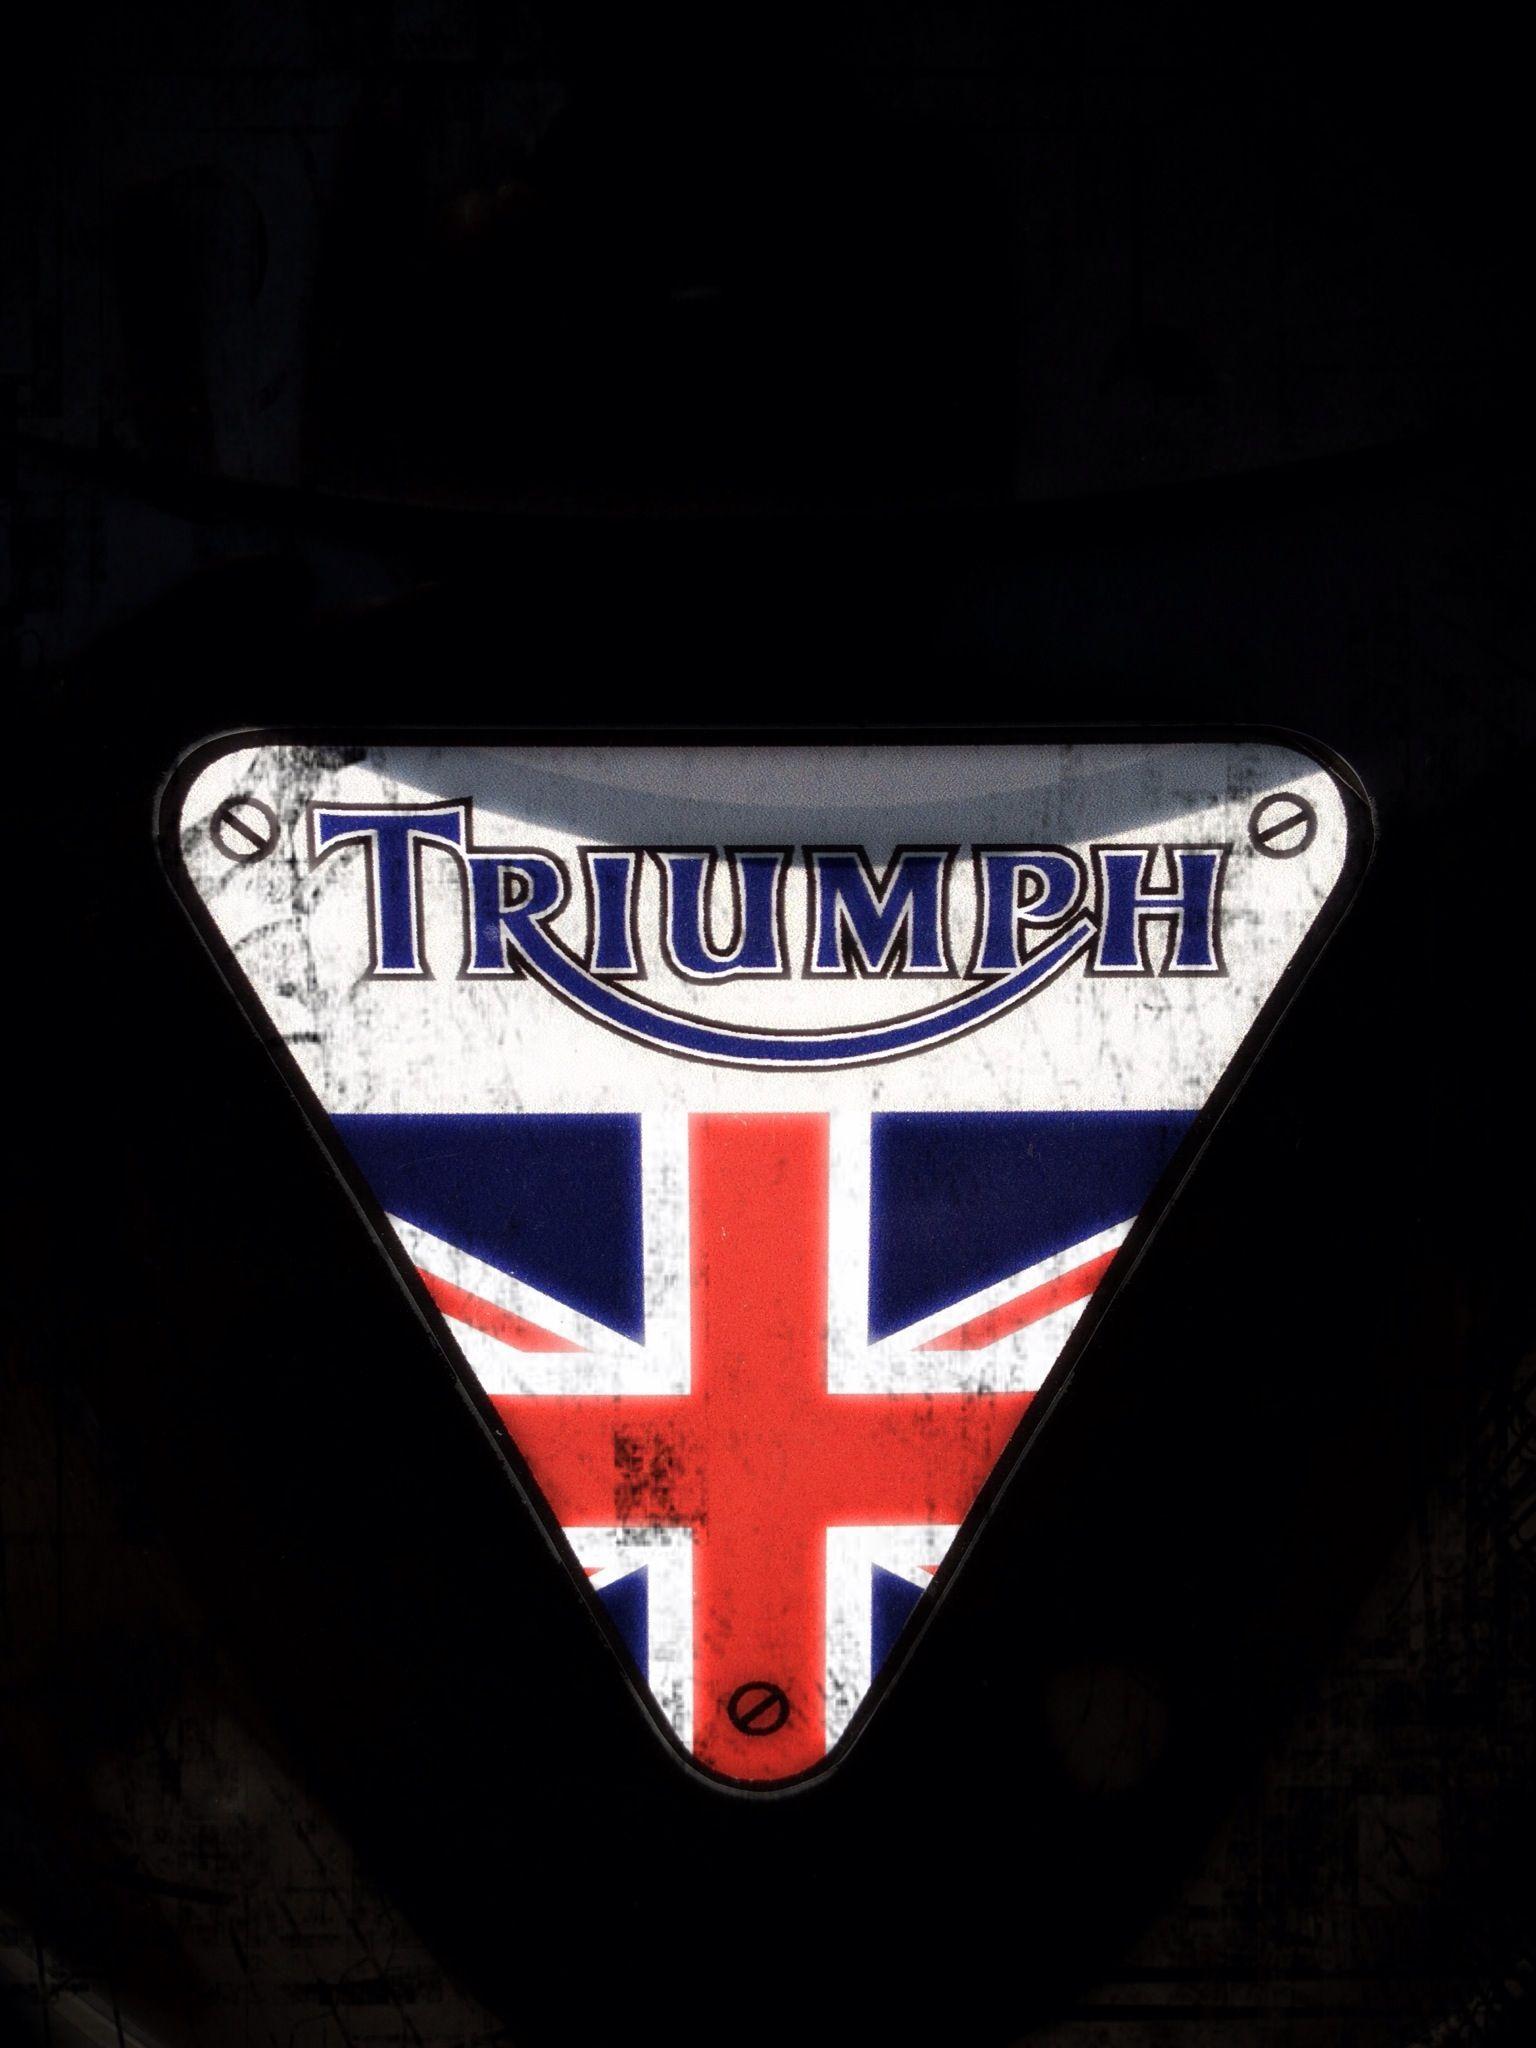 Truimph Logo - Triumph logo | Motostories | Triumph motorcycles, Triumph logo ...